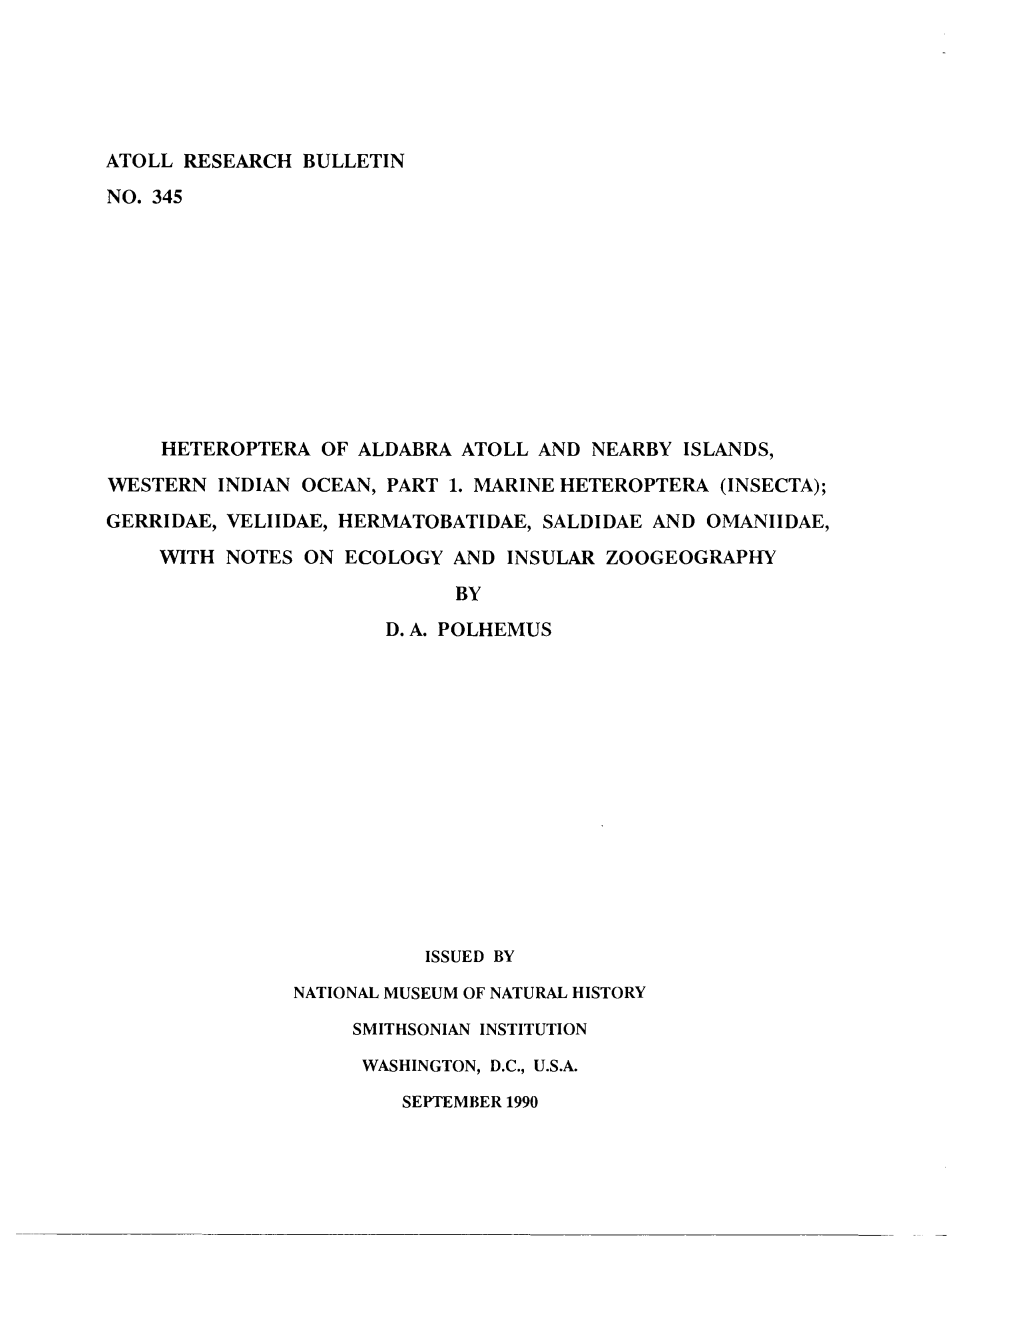 Atoll Research Bulletin No. 345 Heteroptera of Aldabra